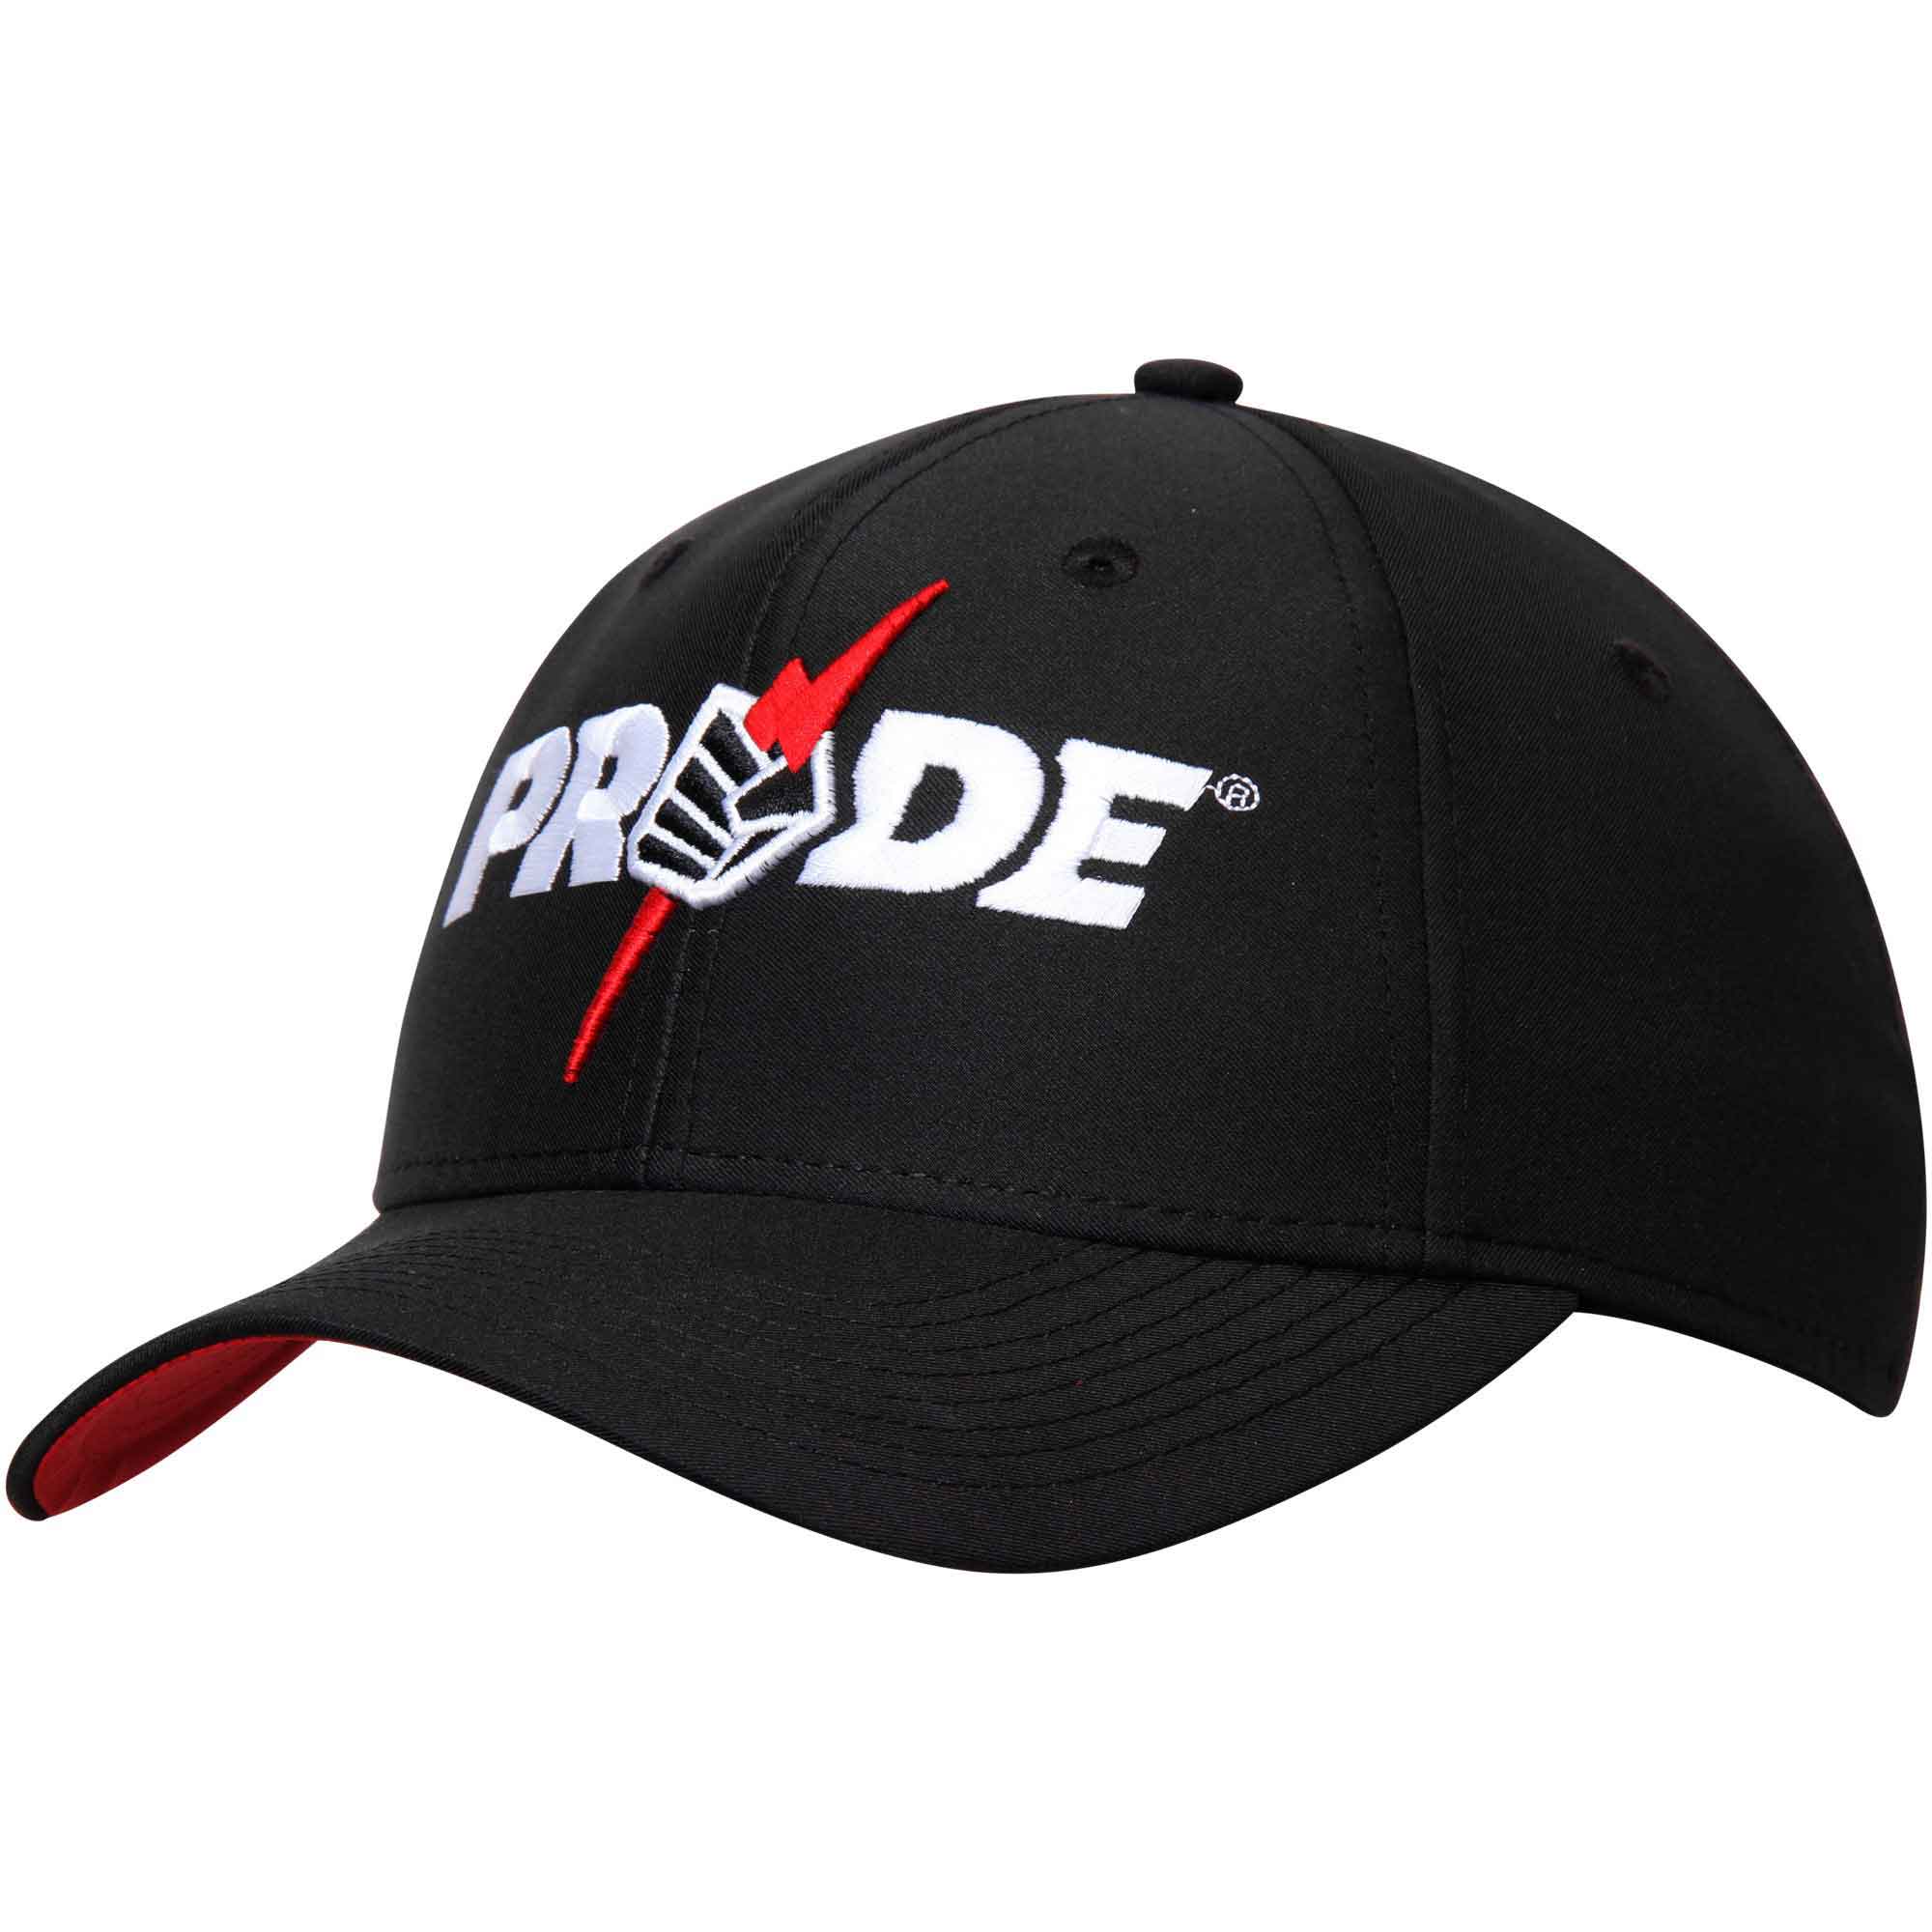 Reebok/リーボック キャップ UFC Pride Reebok Structured Adjustable Hat